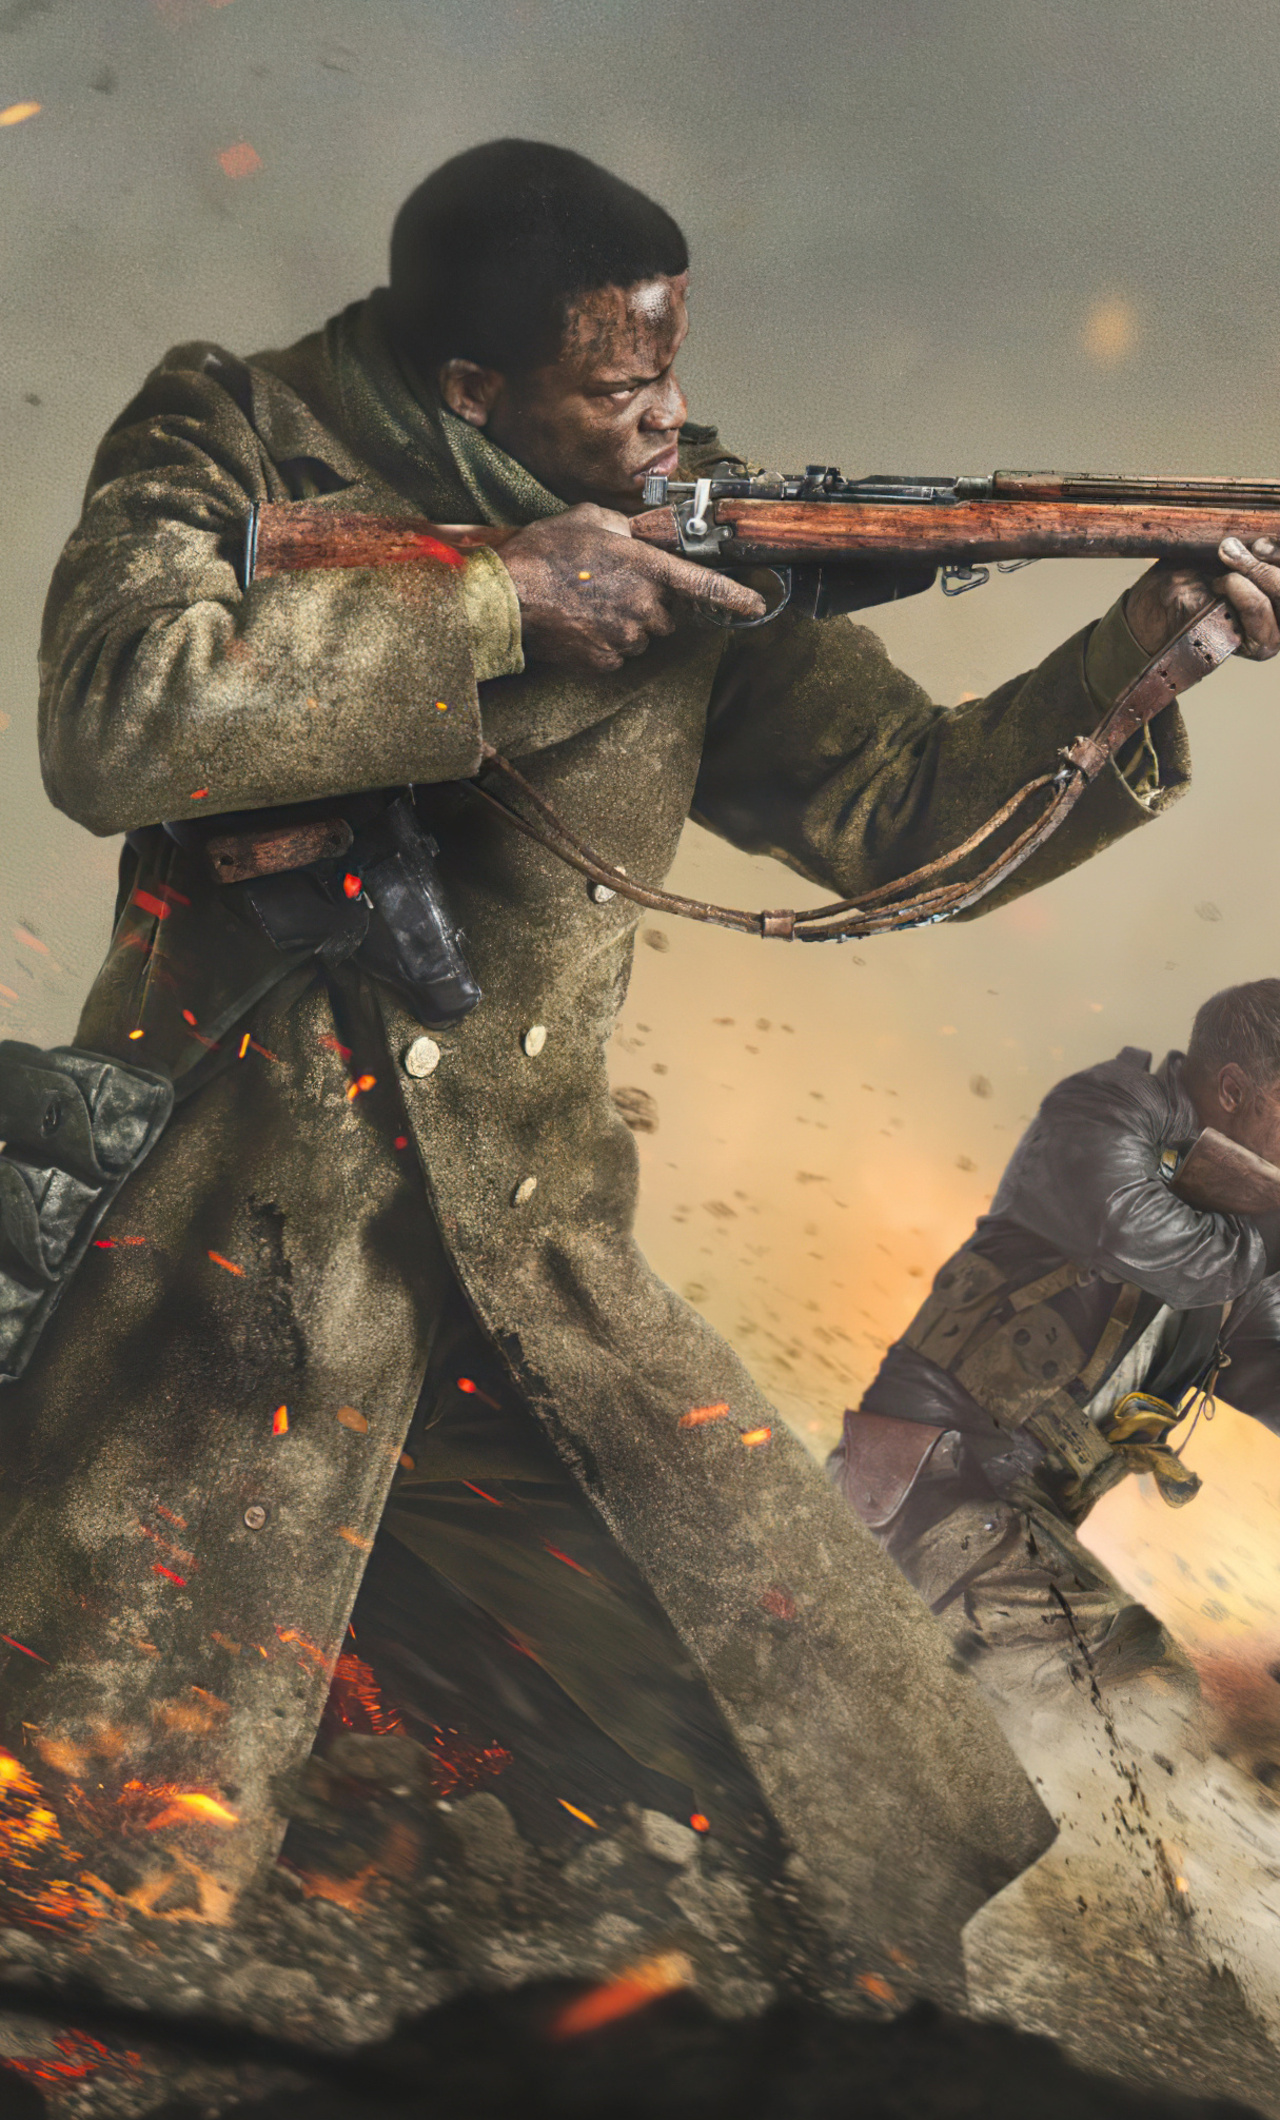 Call of Duty: Vanguard Wallpapers